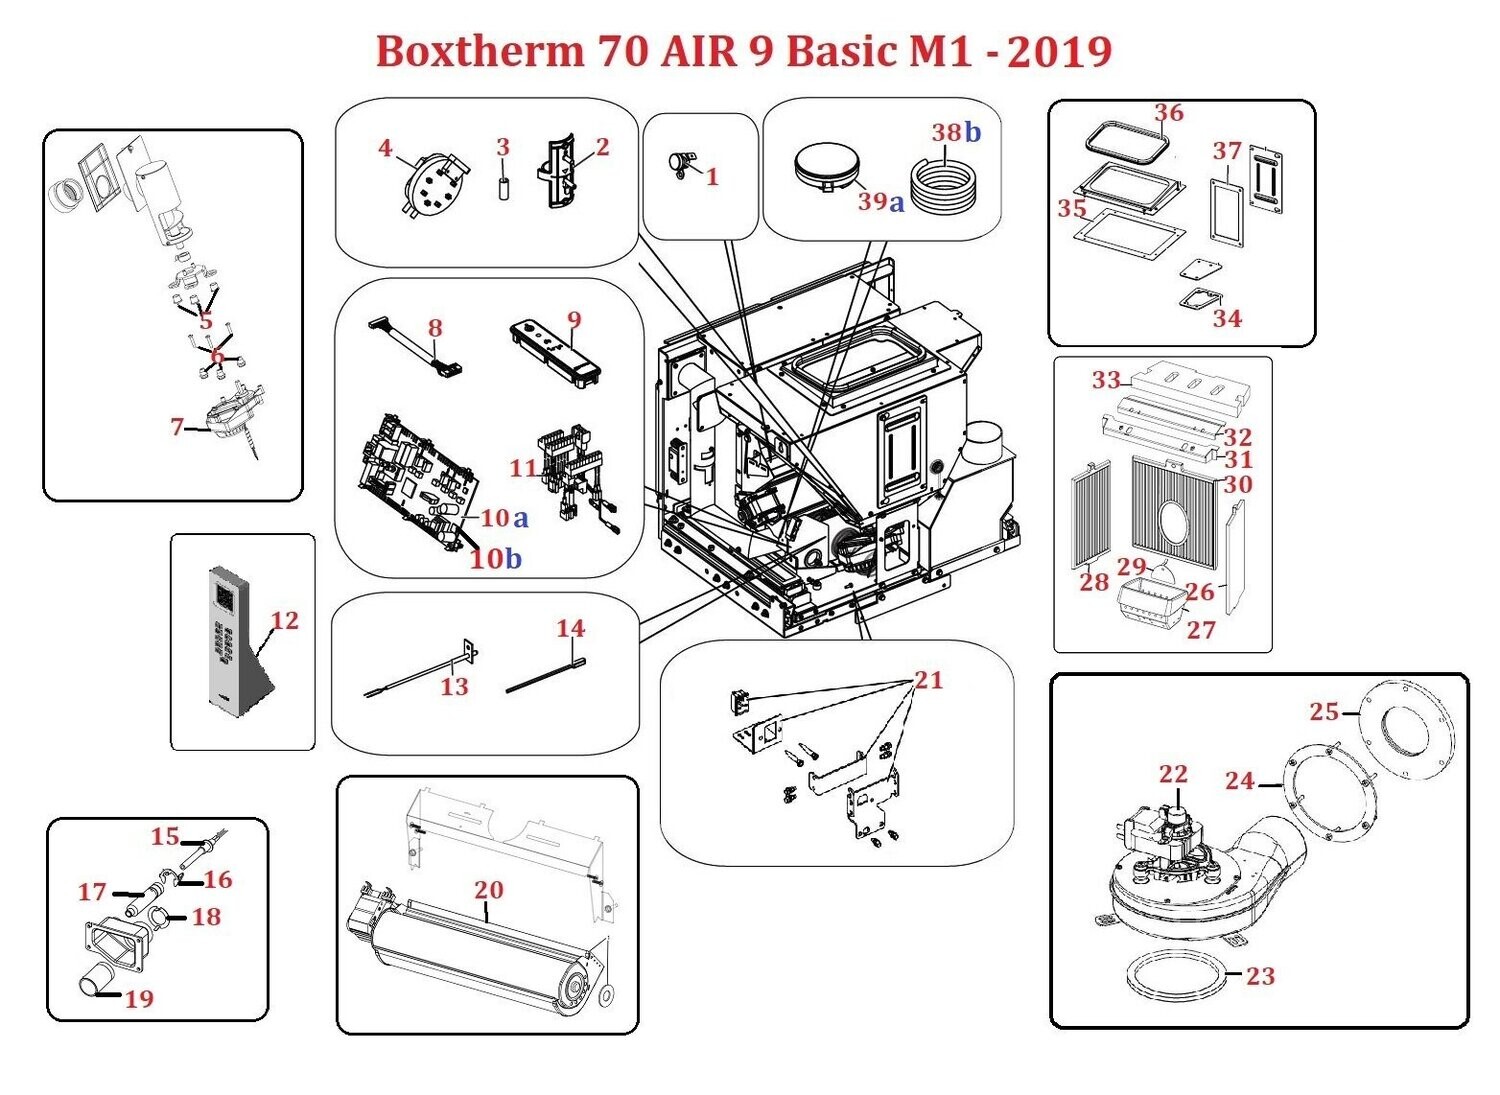 Boxtherm 70 Air 9 Basic M1 - 2019